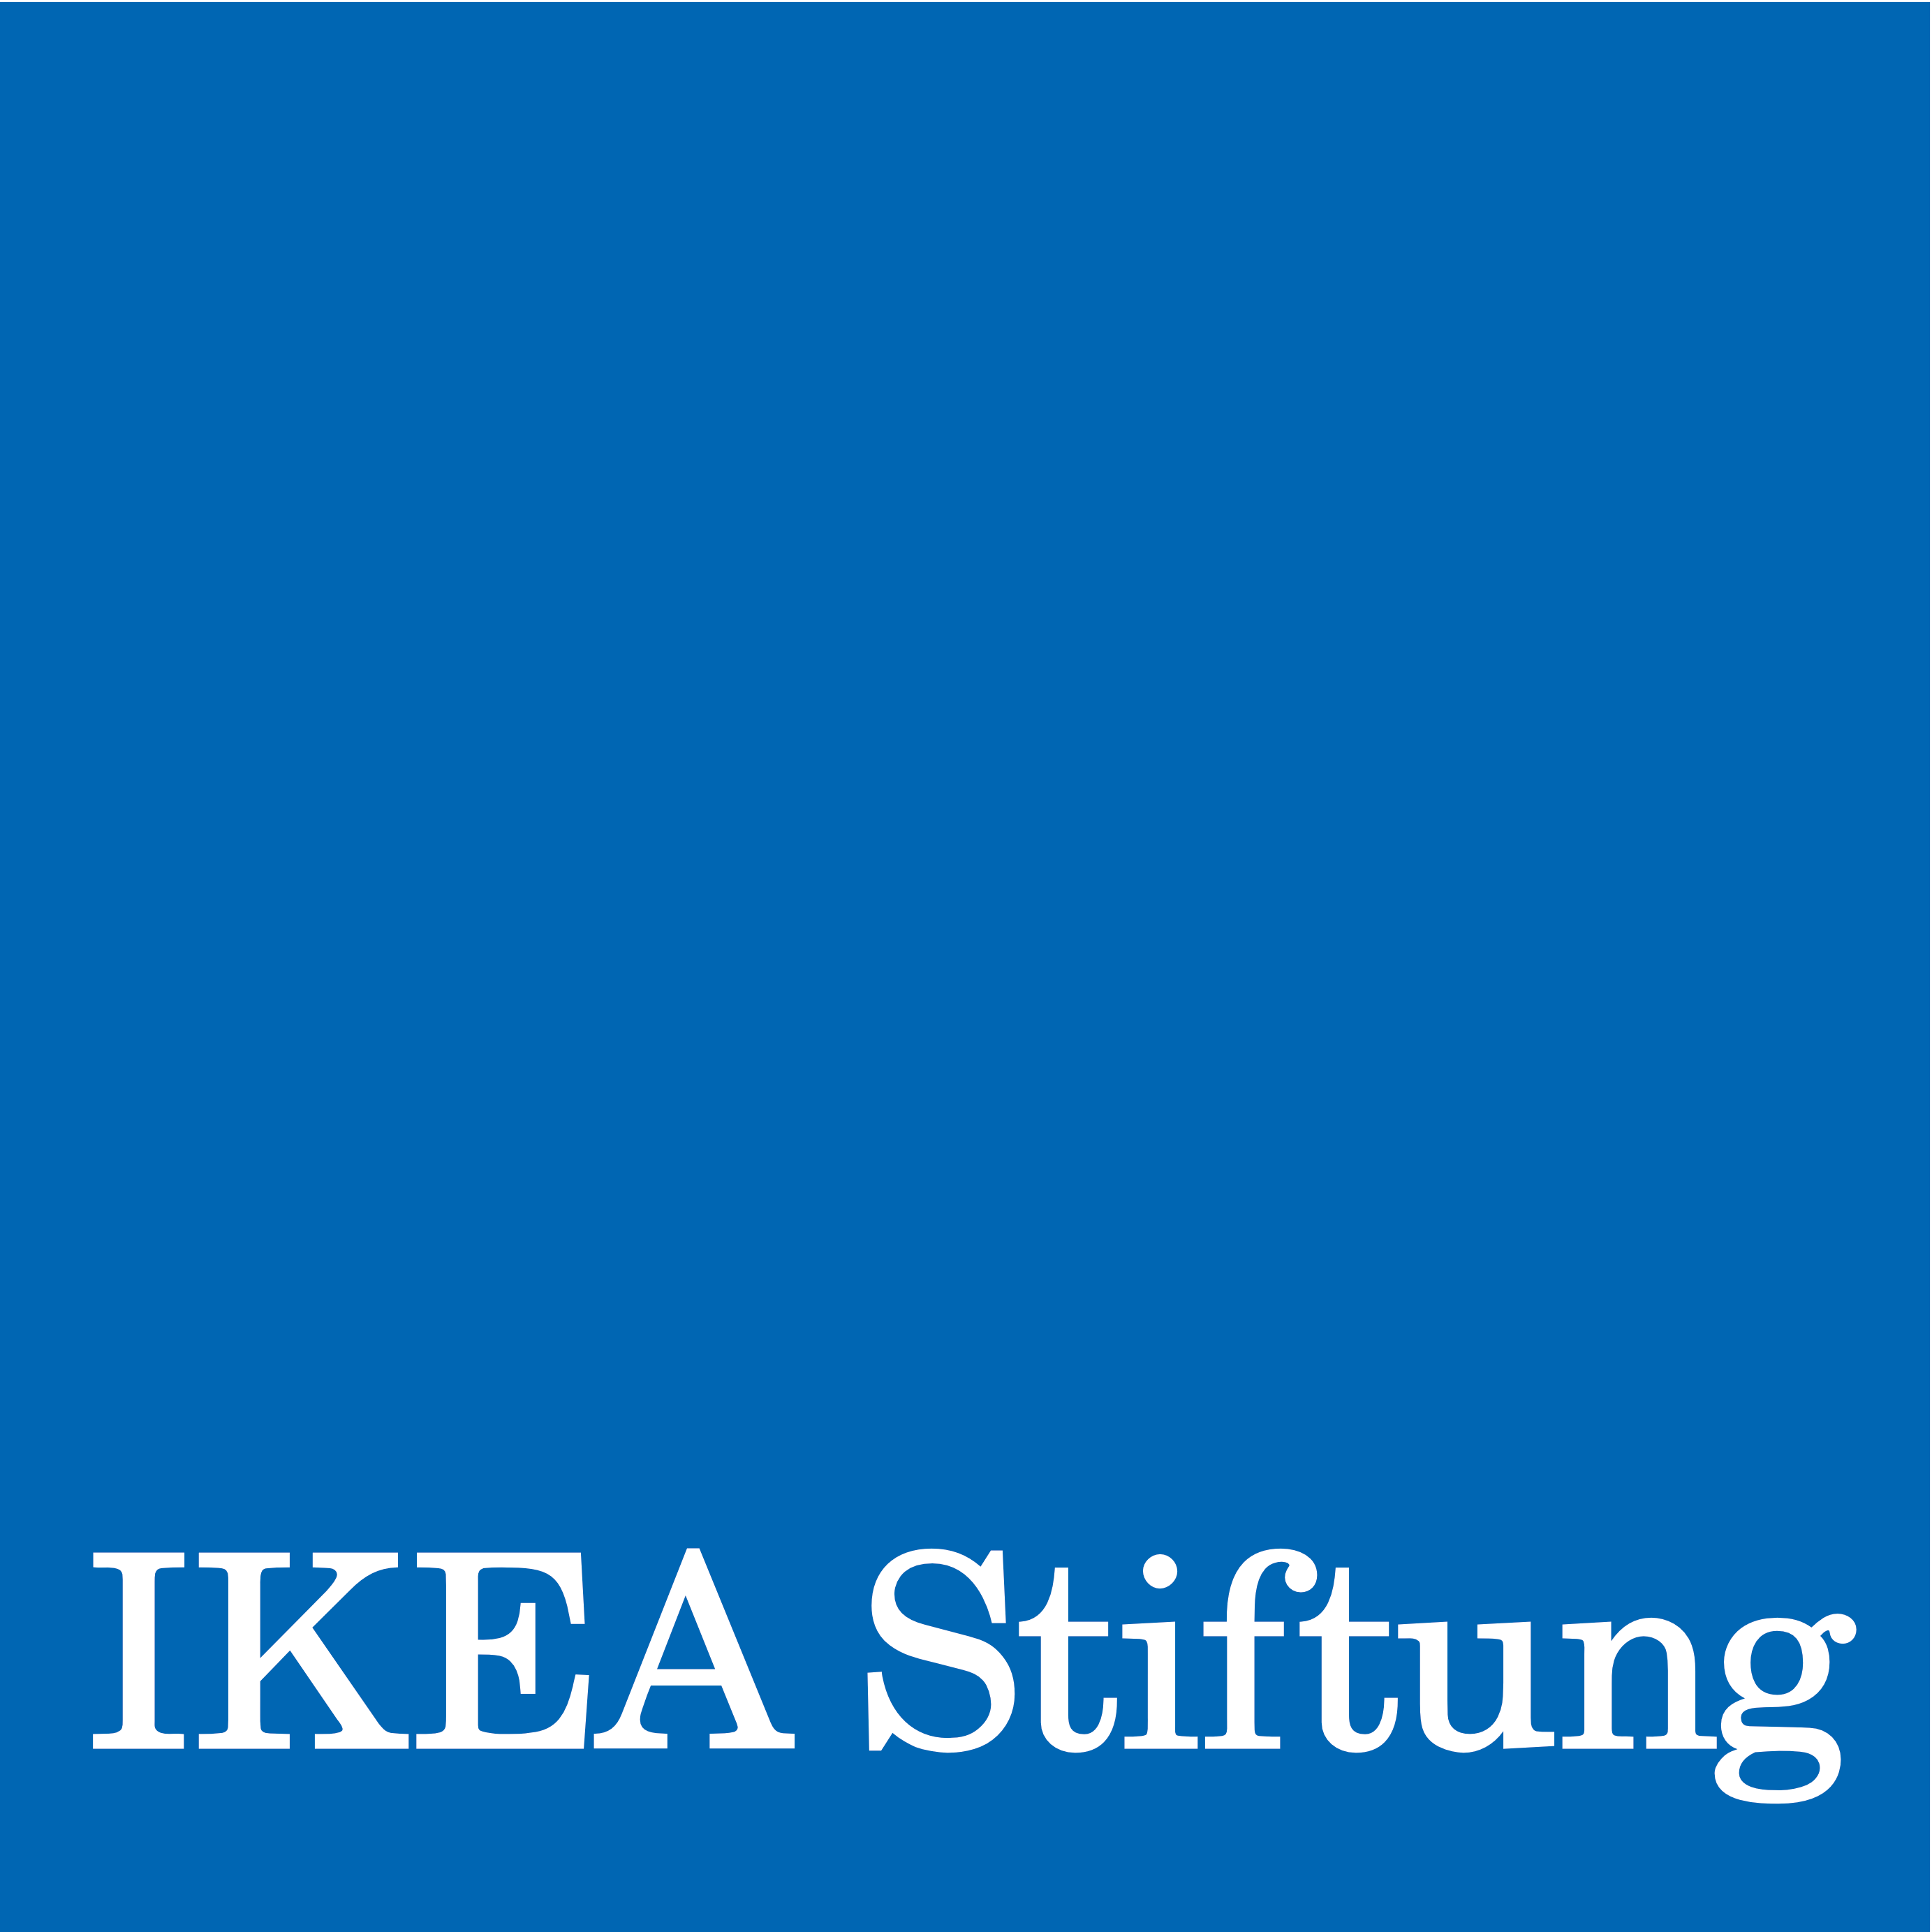 IKEA_Stiftung_Logo_Original_2014_4c.png